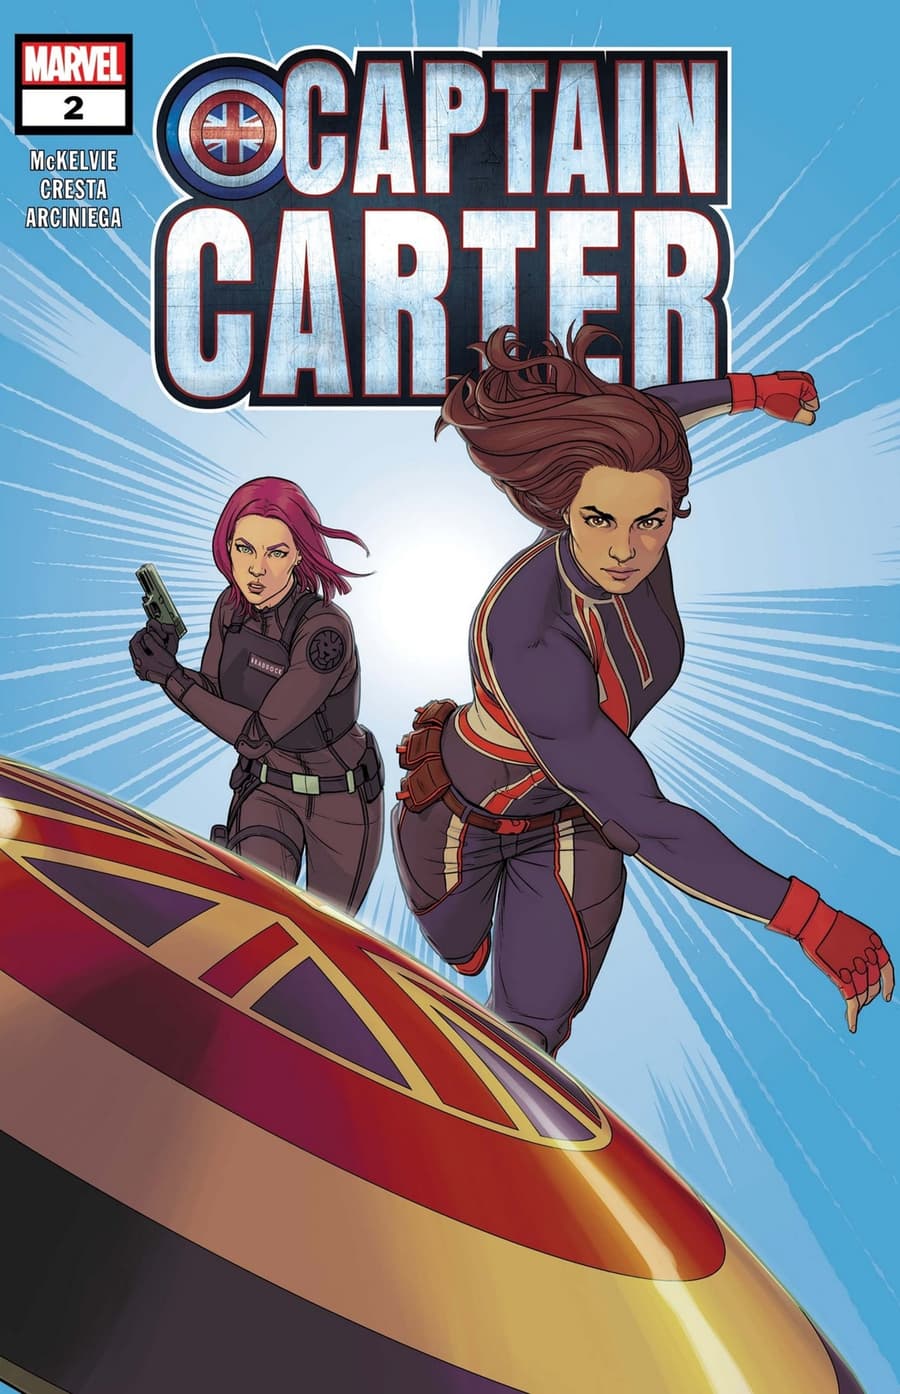 CAPTAIN CARTER (2022) #2 cover by Jamie McKelvie